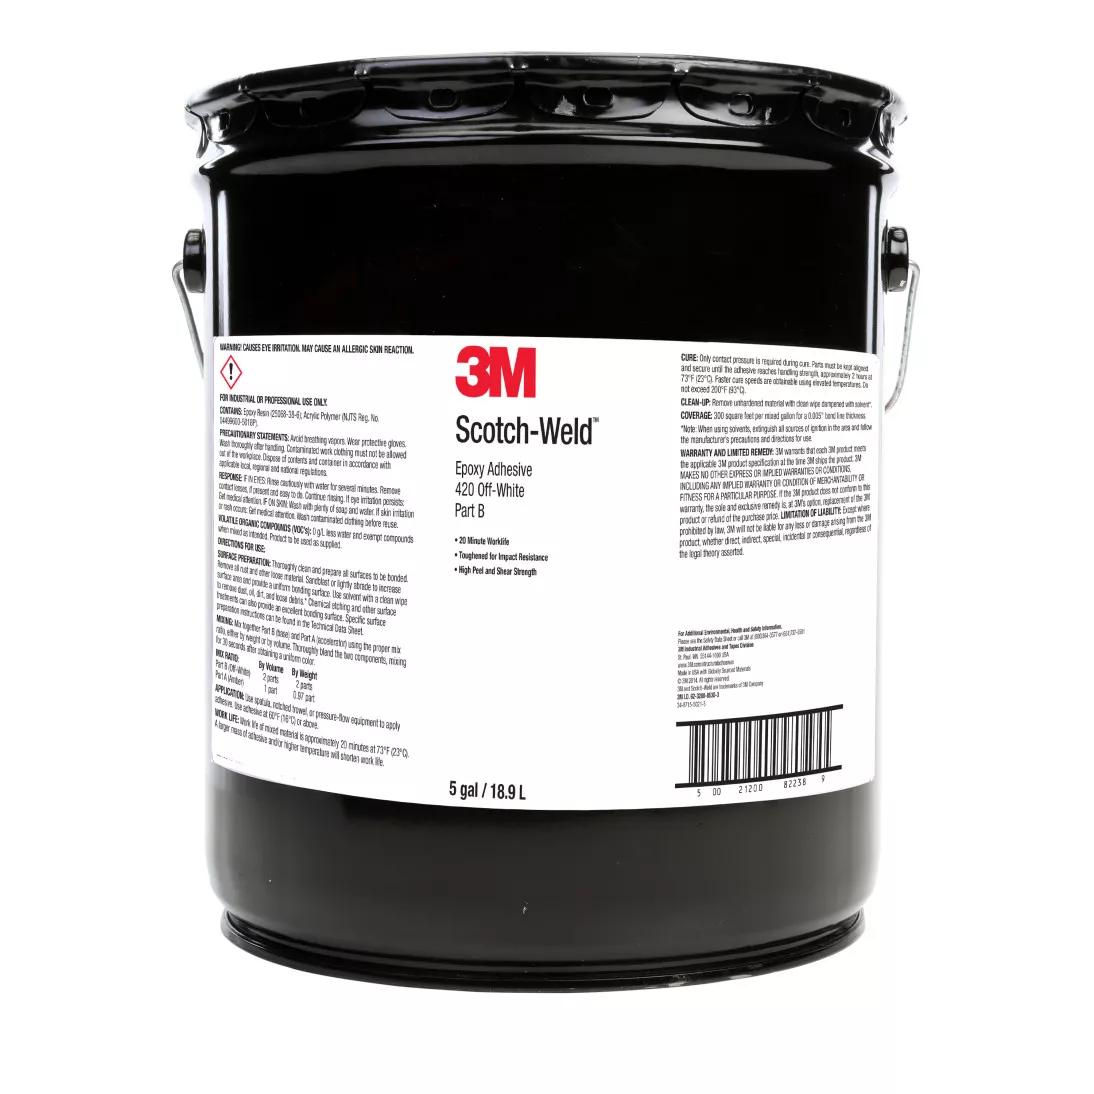 3M™ Scotch-Weld™ Epoxy Adhesive 420, Off-White, Part B, 5 Gallon Drum
(Pail)